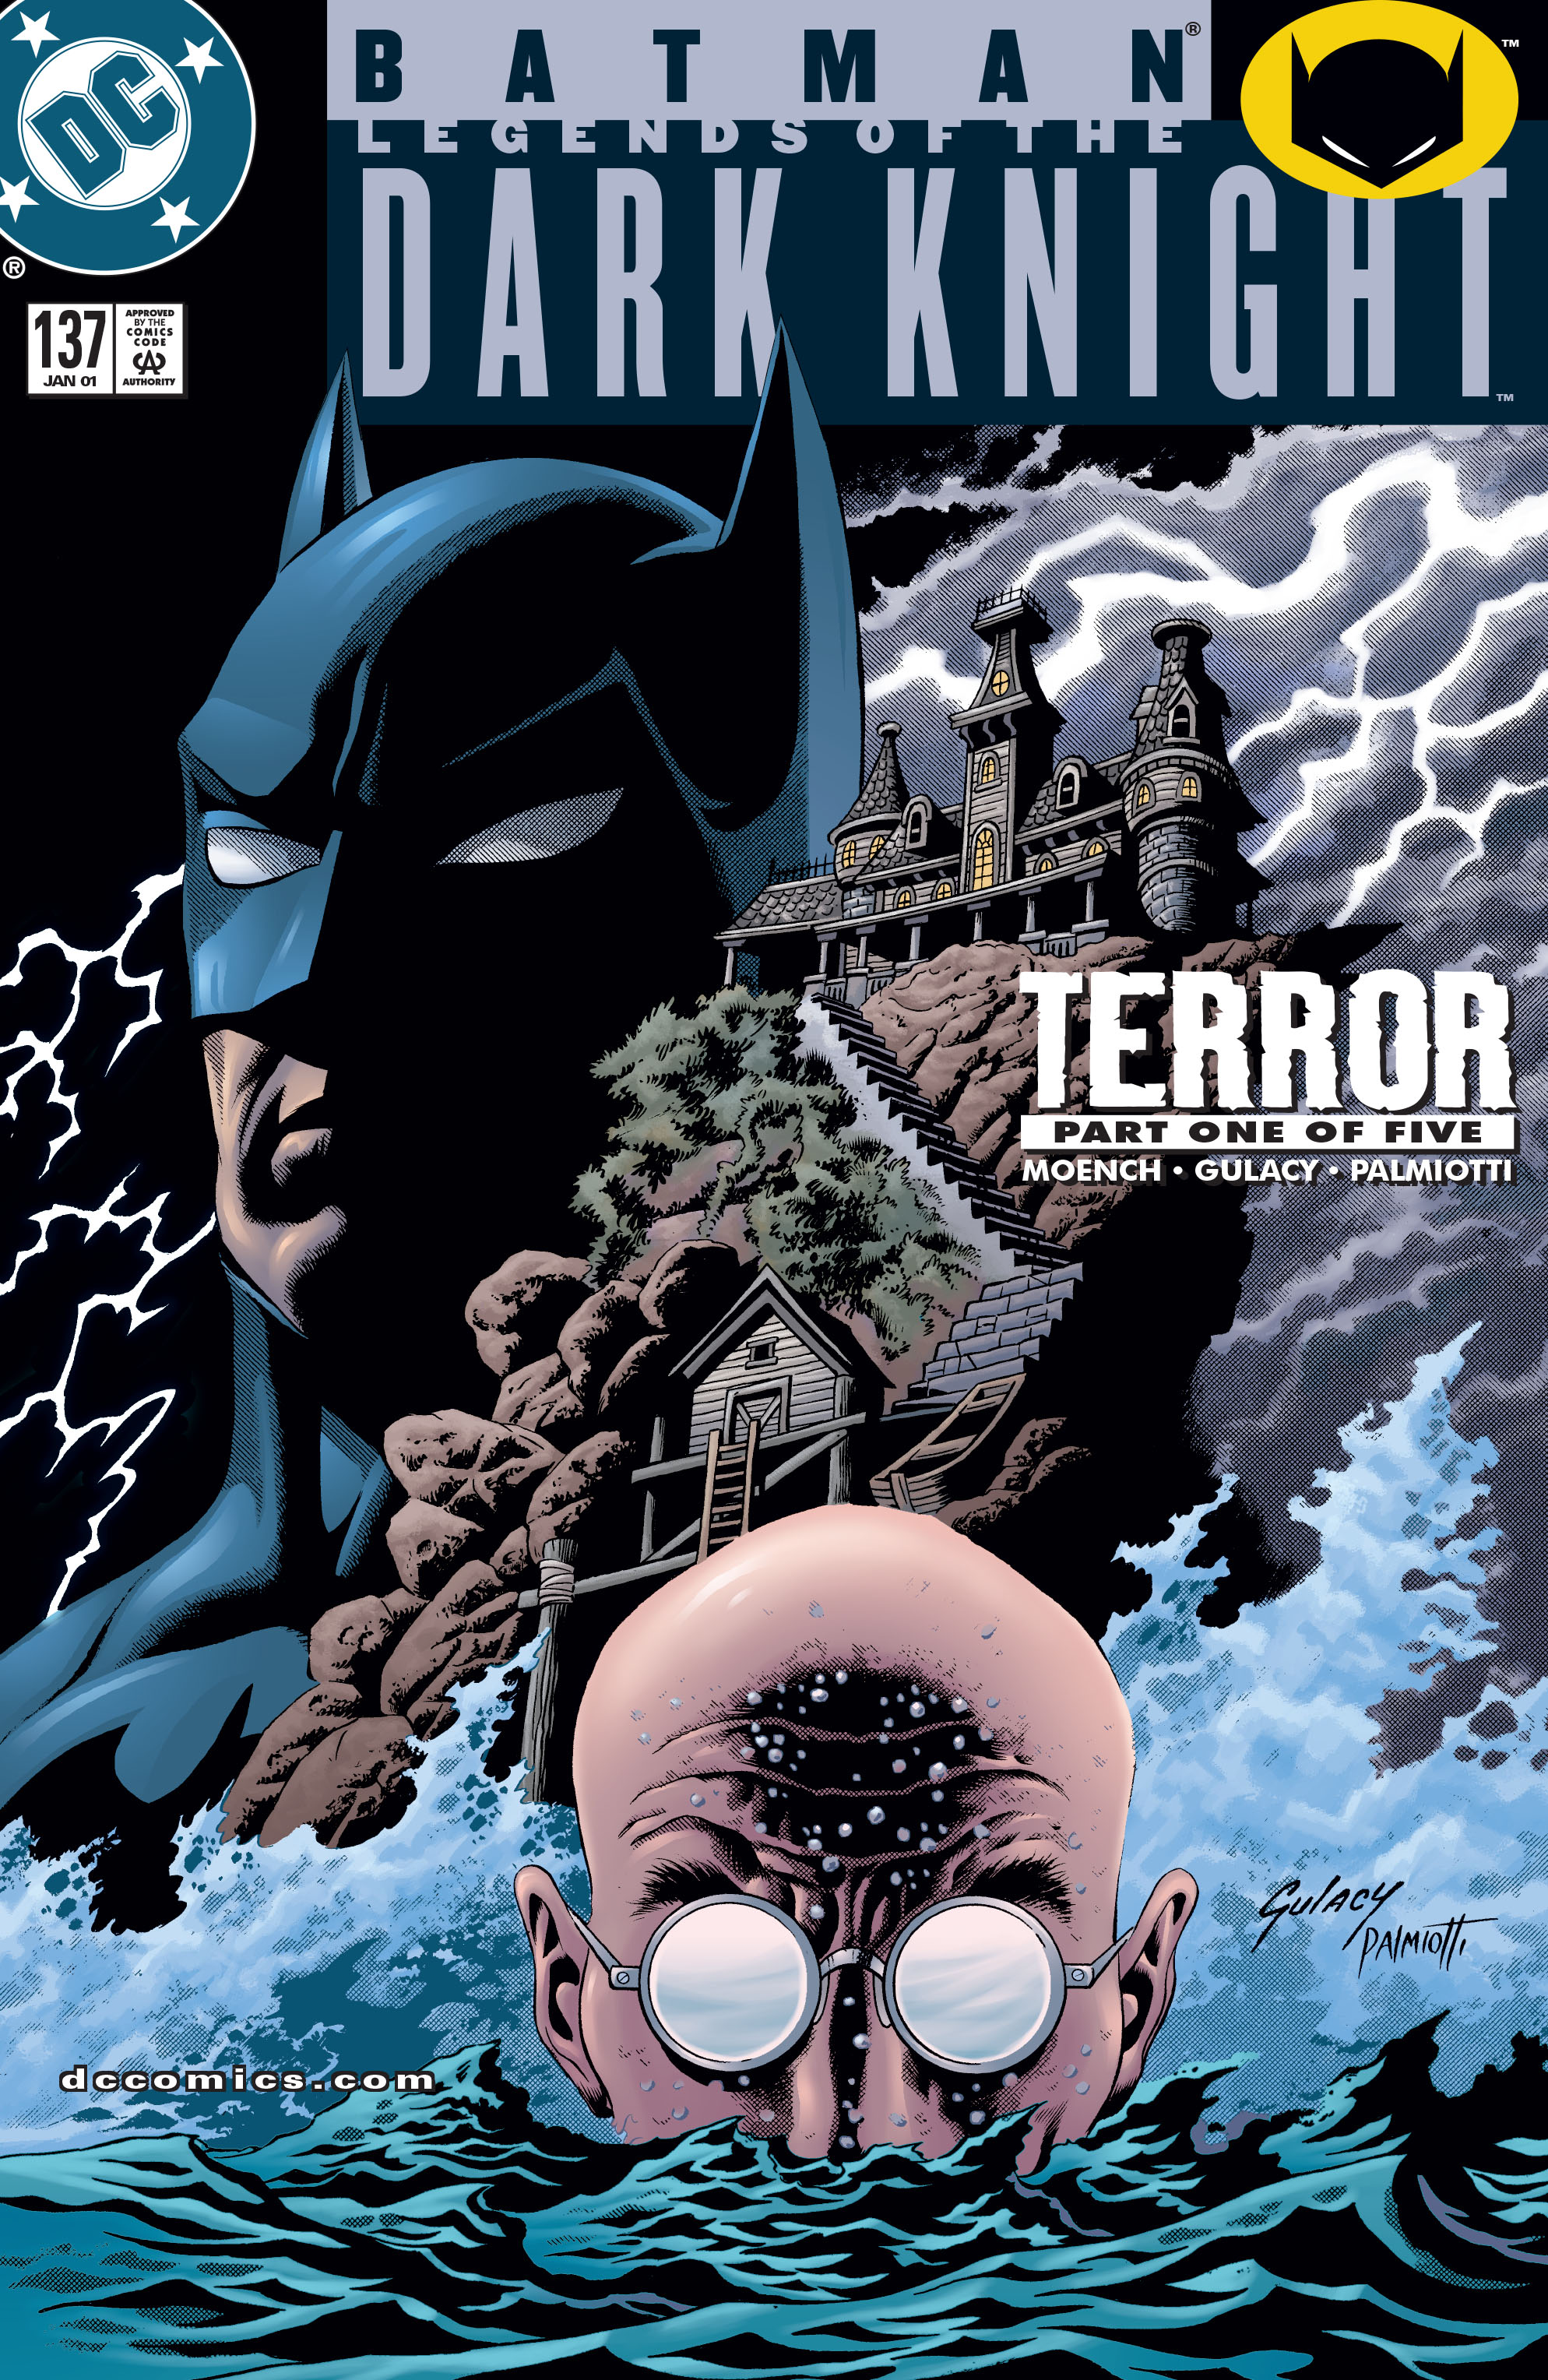 Read online Batman: Legends of the Dark Knight comic -  Issue #137 - 1